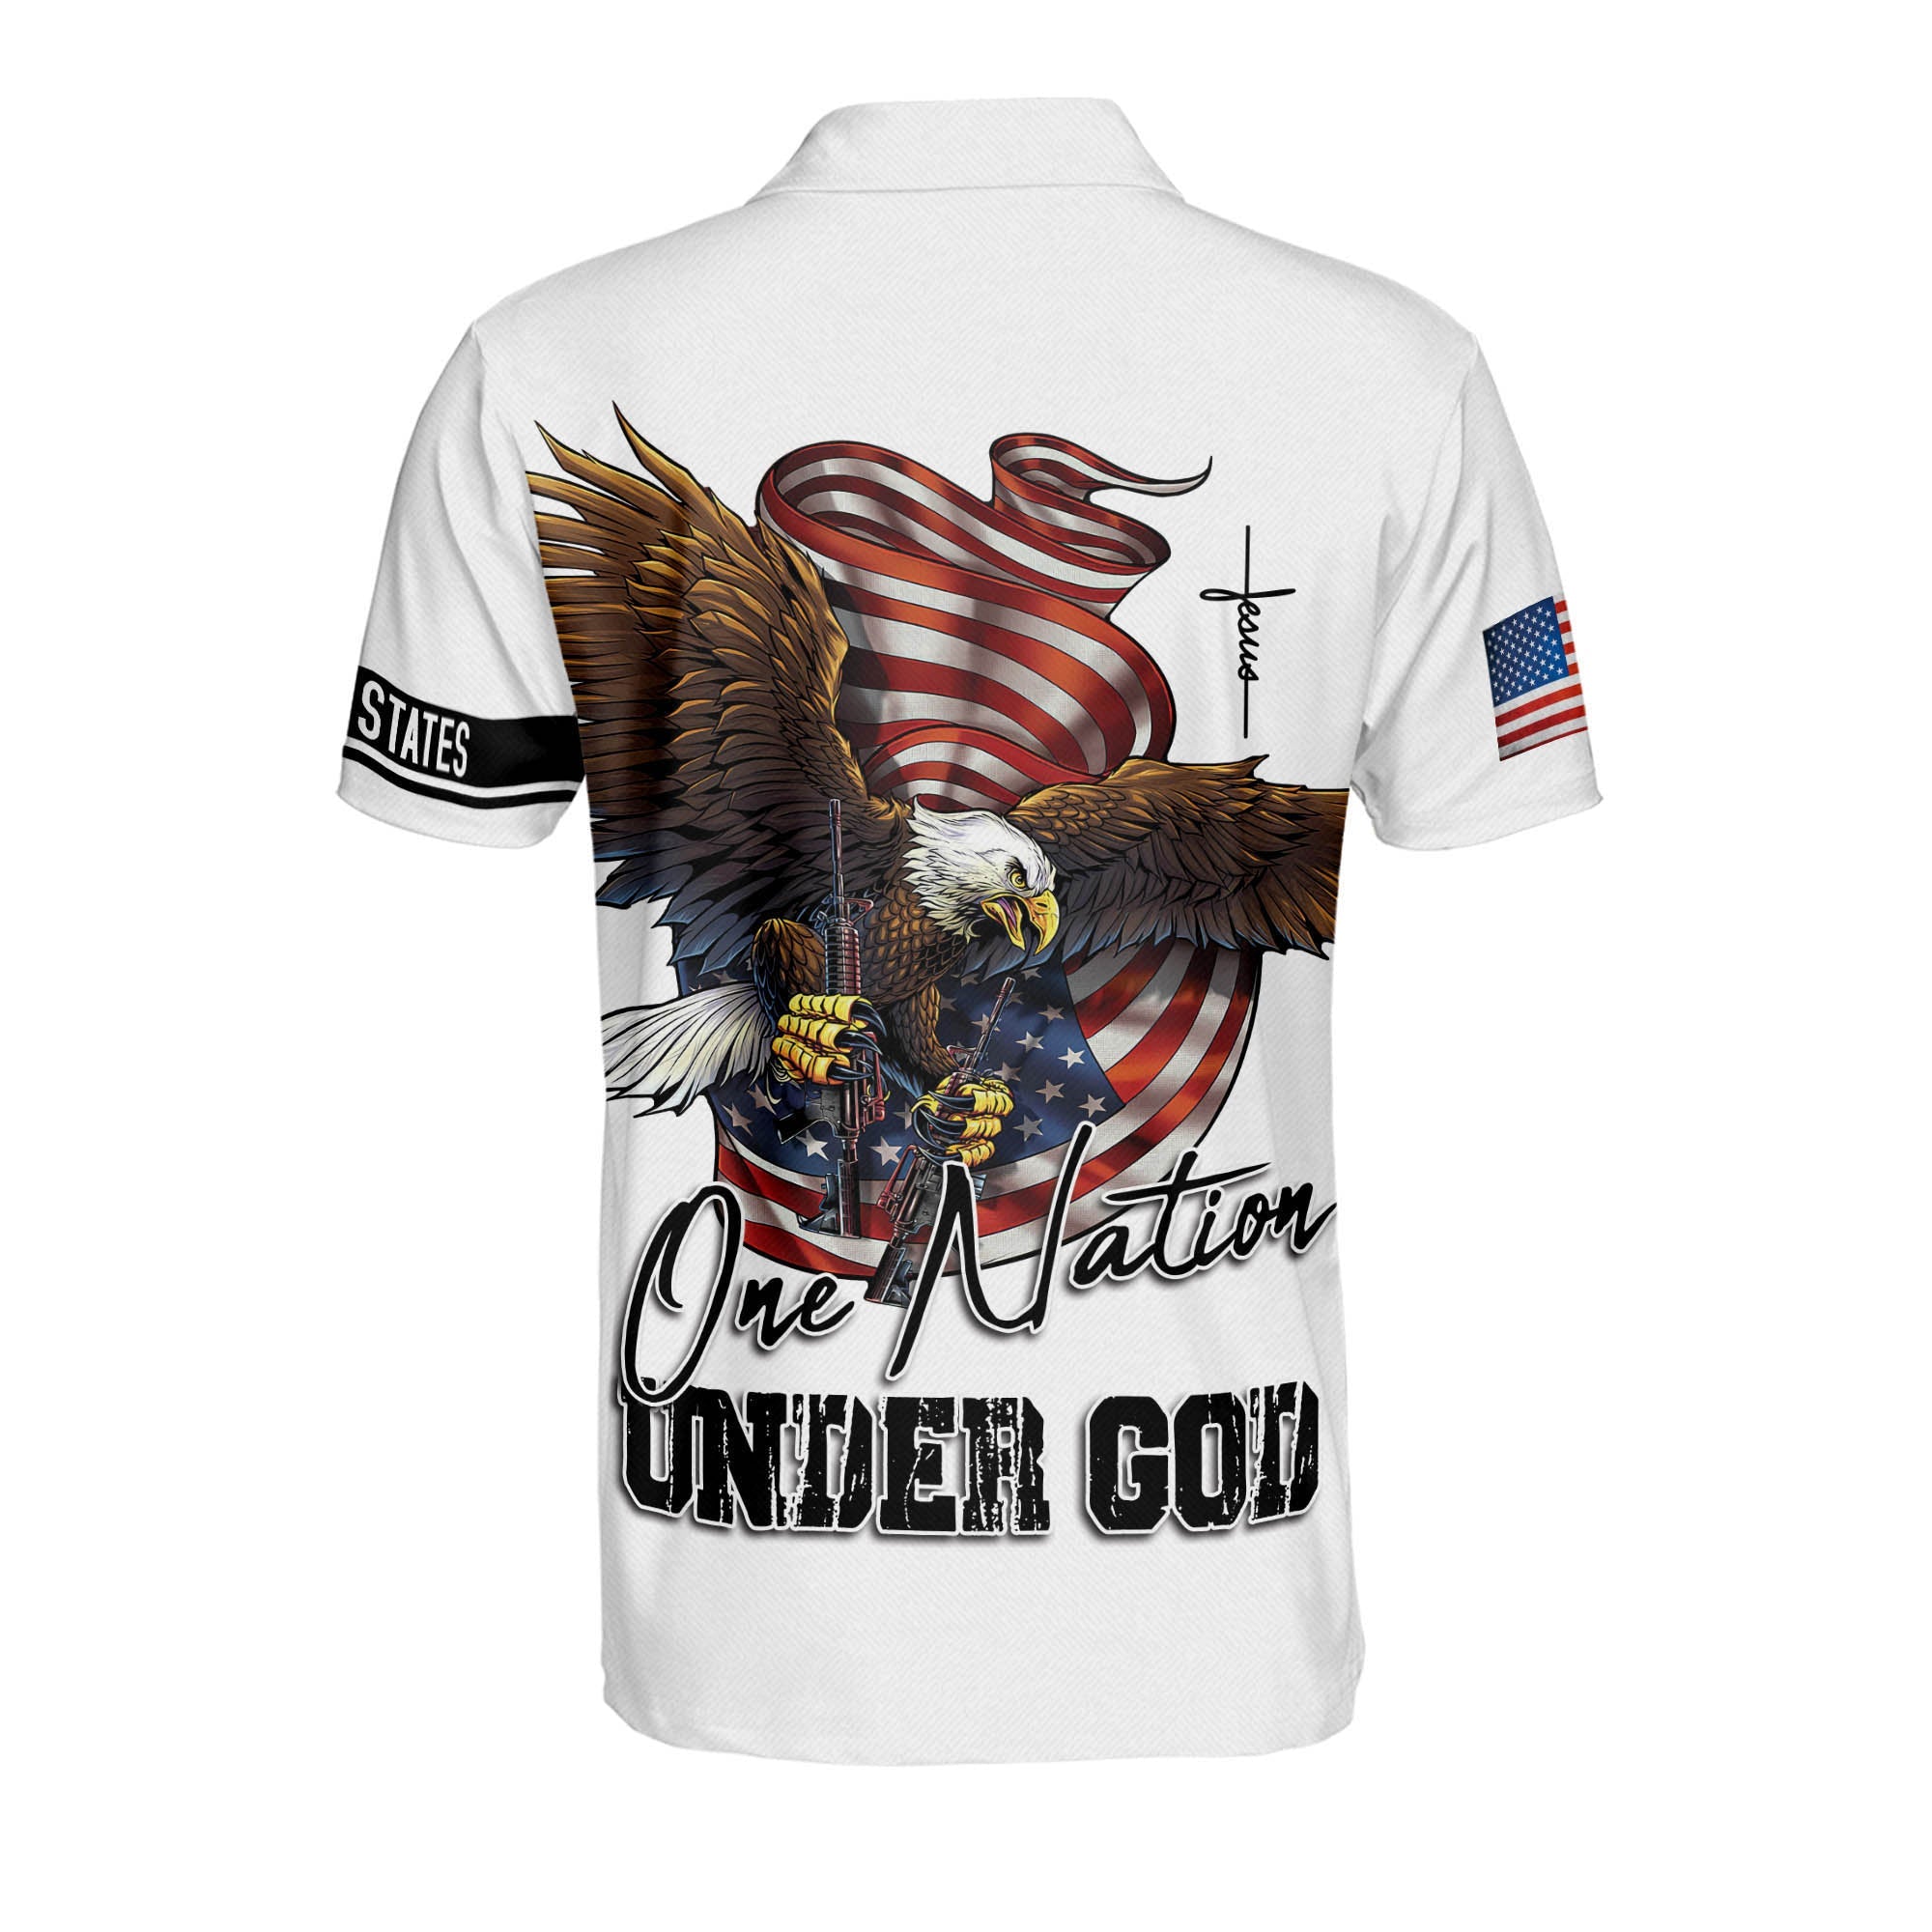 One Nation Under God Eagle Polo Shirt/ Jesus Polo Shirt/ Independence Day Shirt